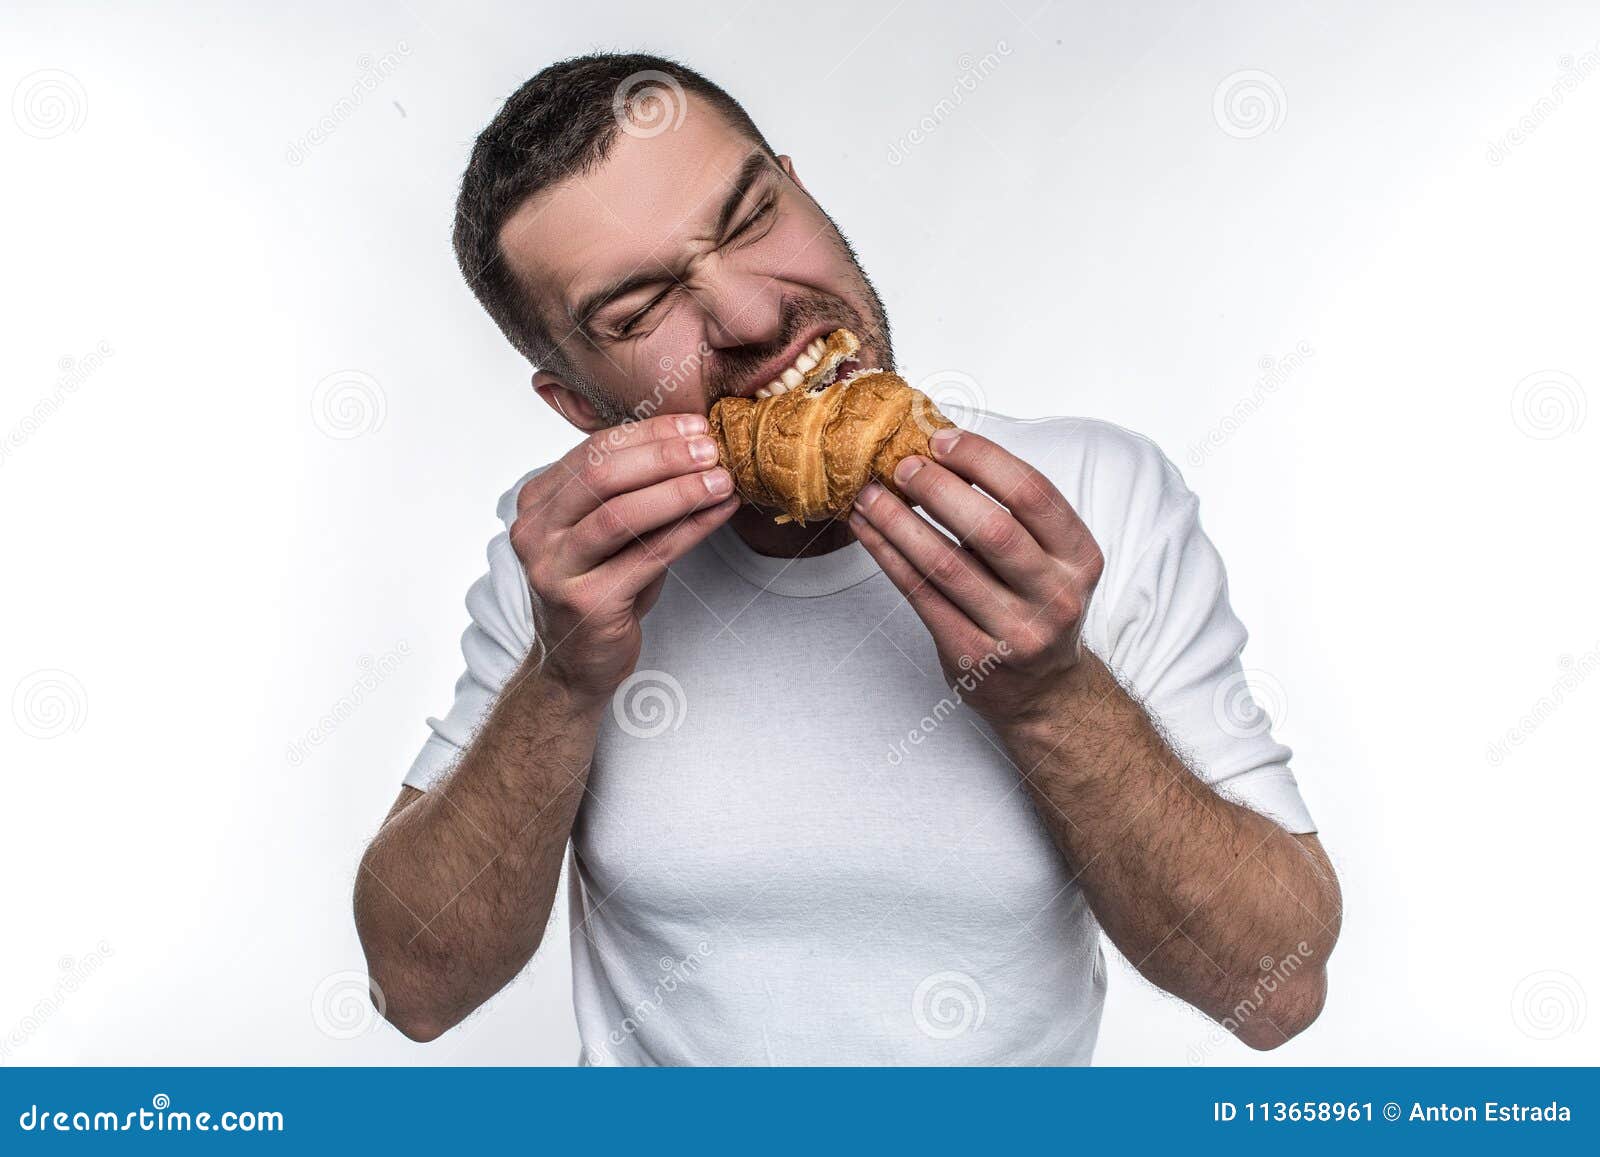 man-eating-croissan-biting-hard-likes-french-dessert-isolated-white-background-man-eating-croissan-113658961.jpg